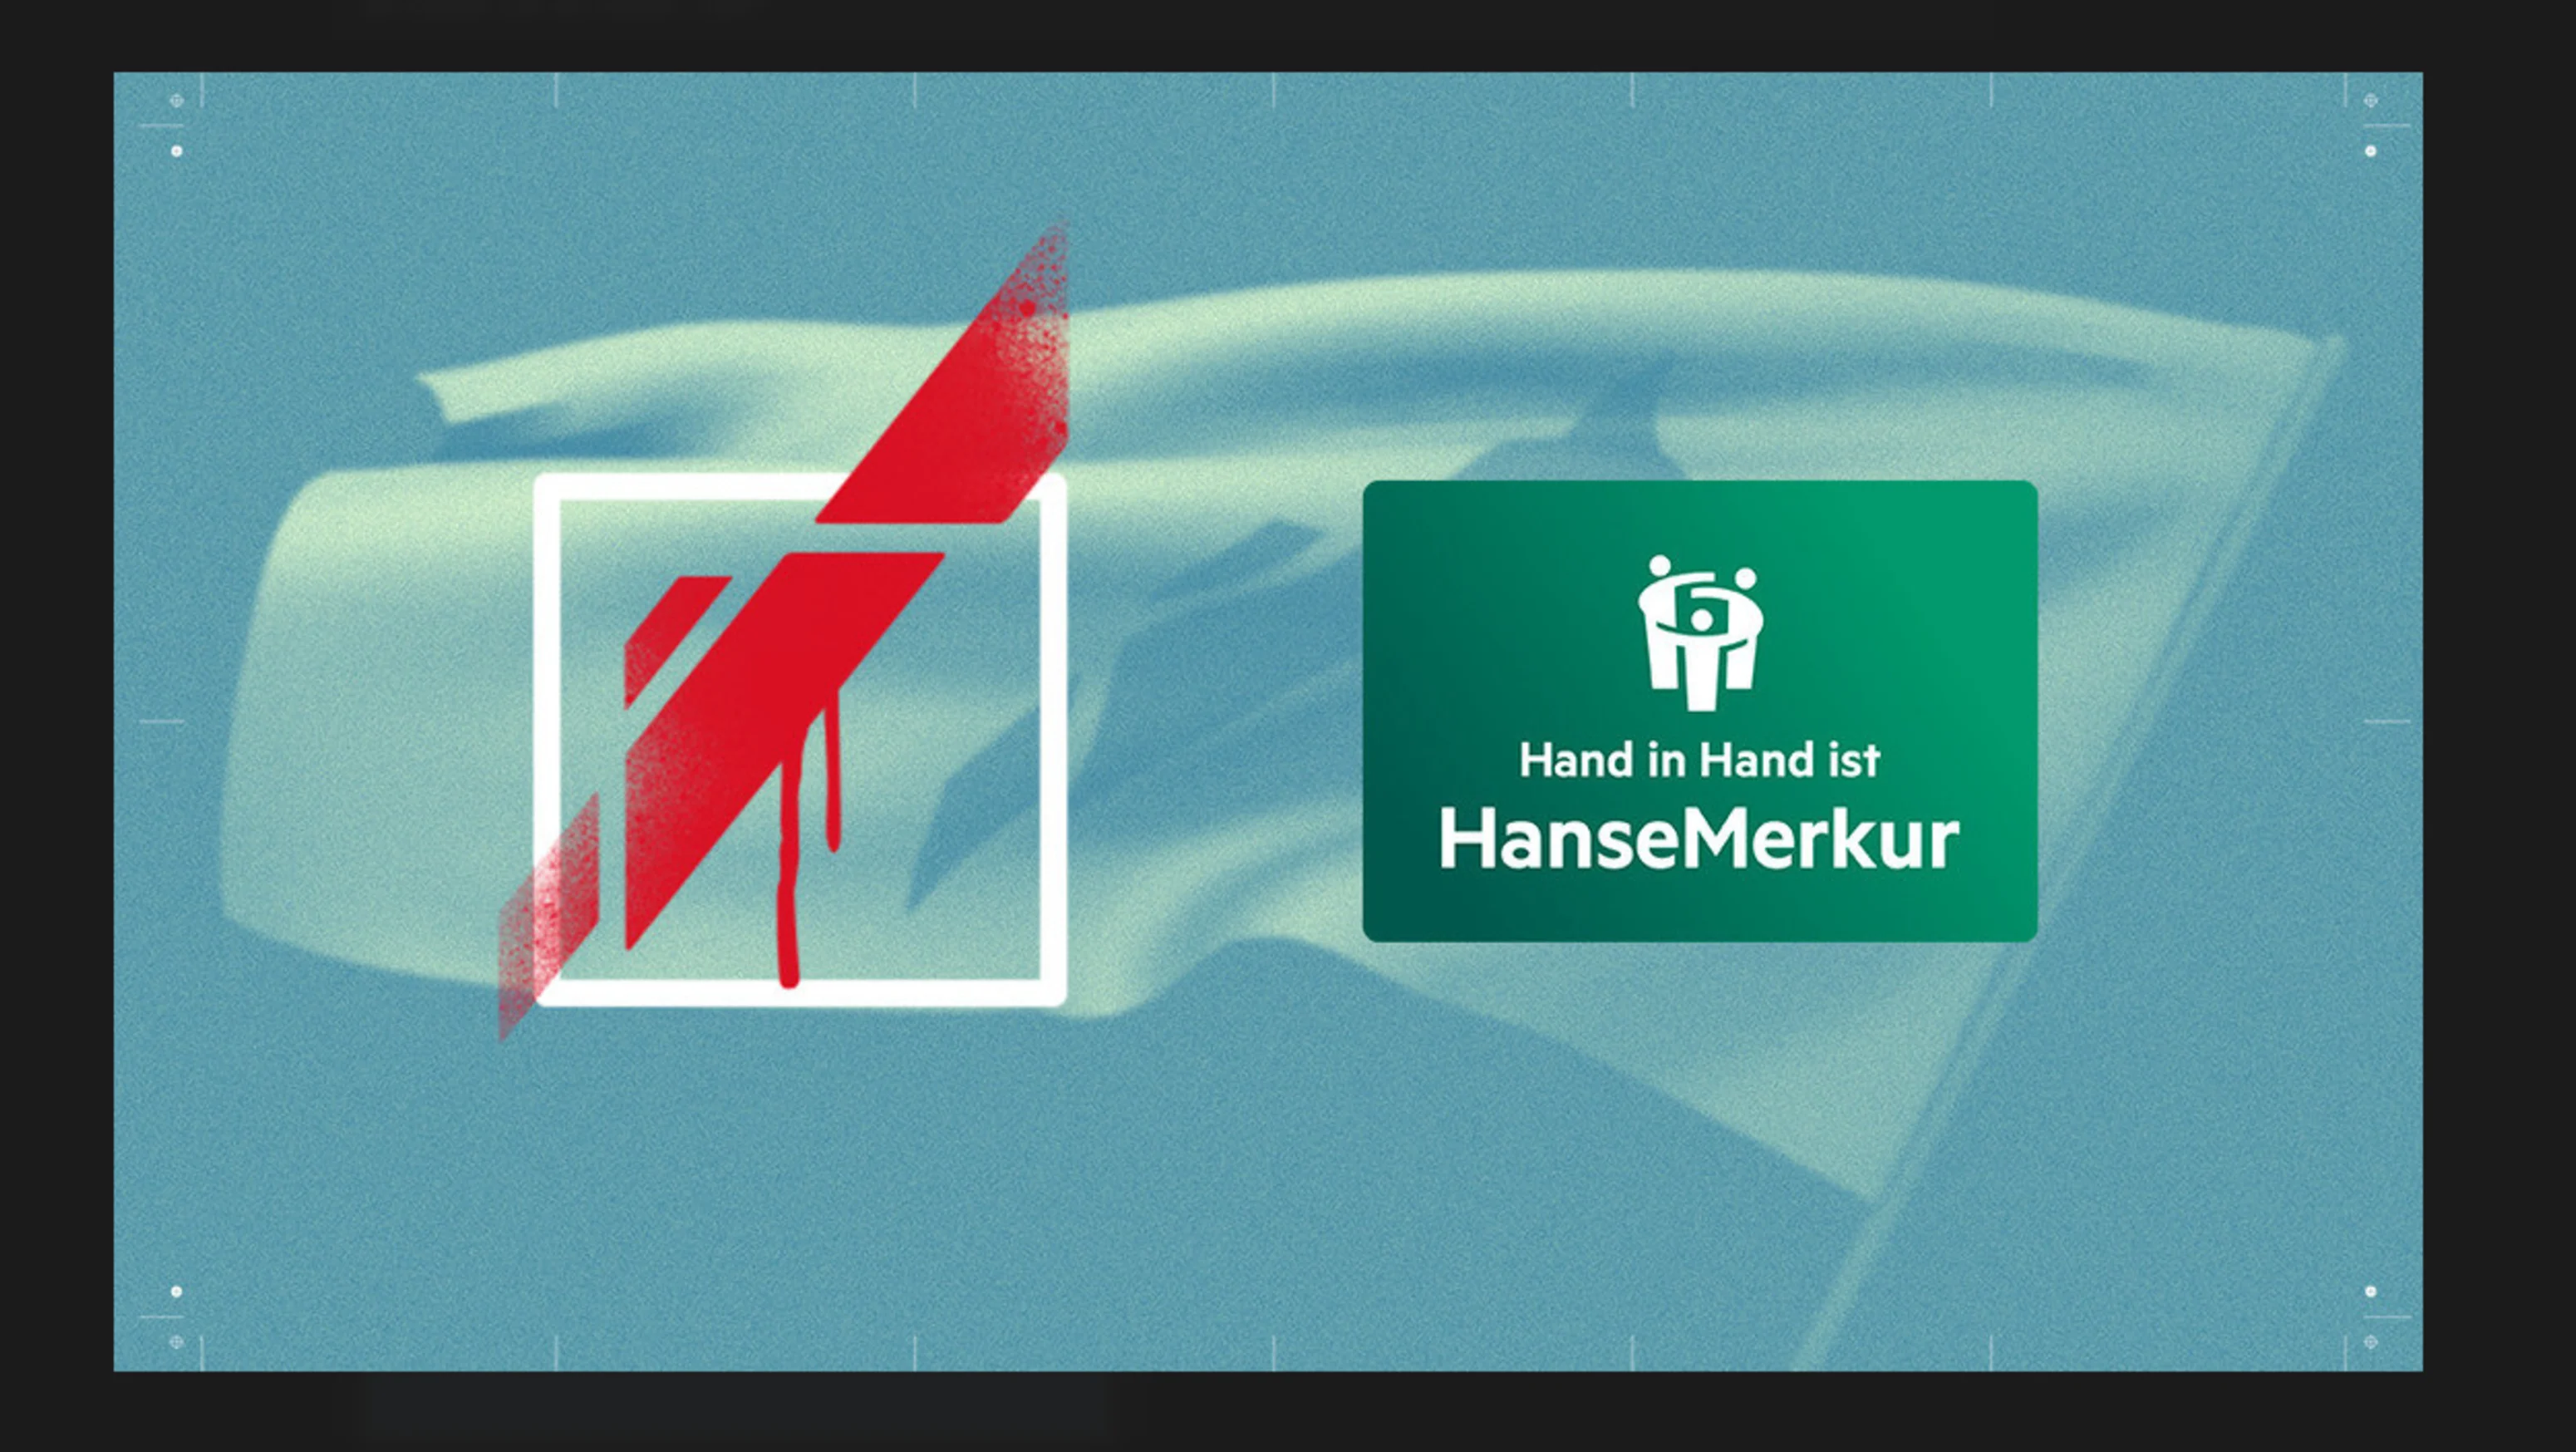 HanseMerkur and Valorant logos